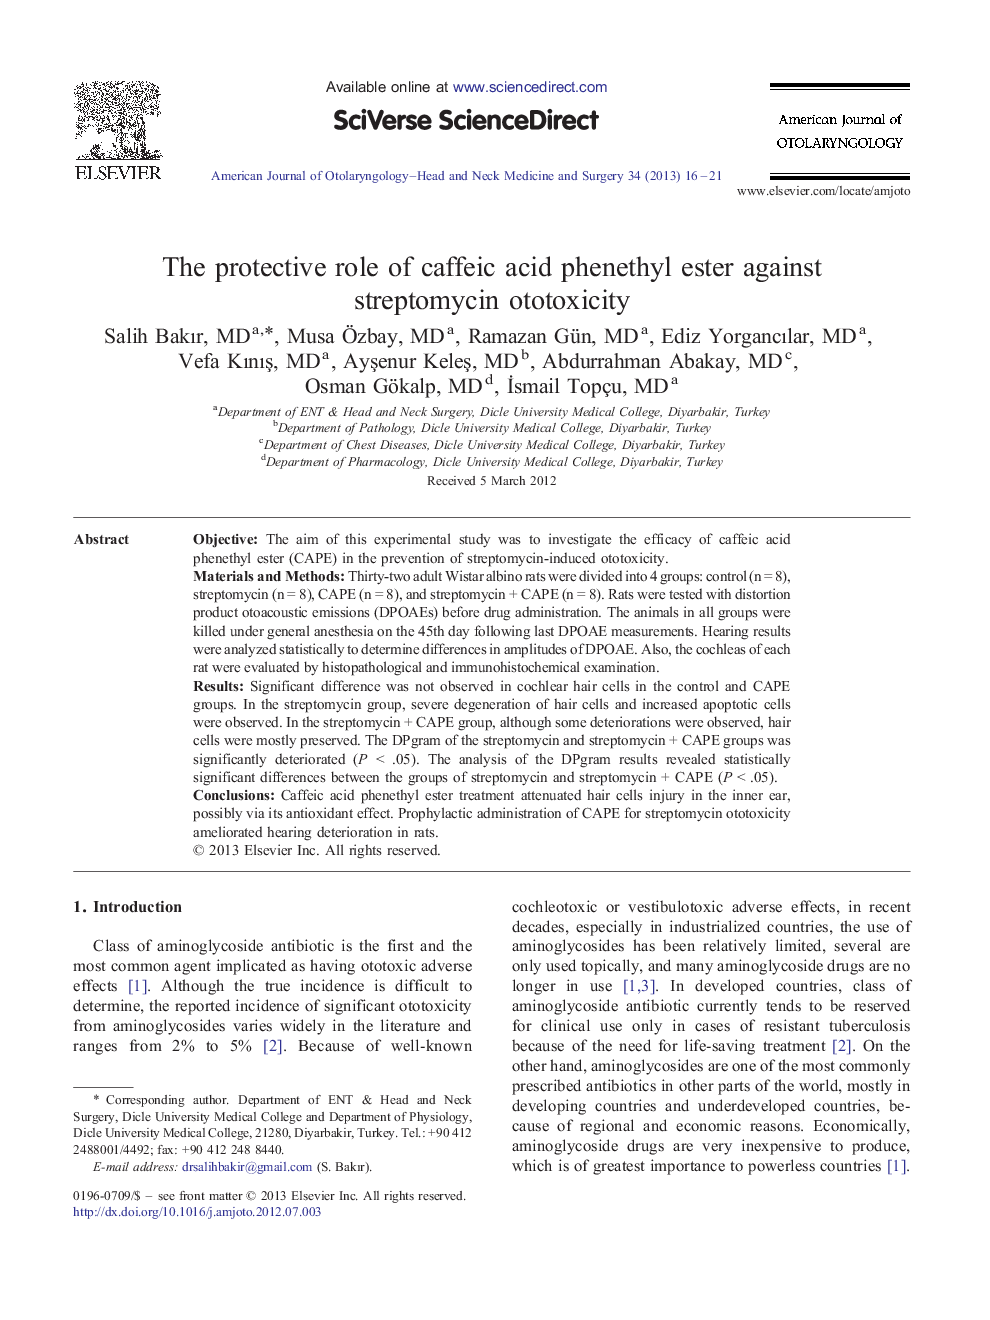 The protective role of caffeic acid phenethyl ester against streptomycin ototoxicity